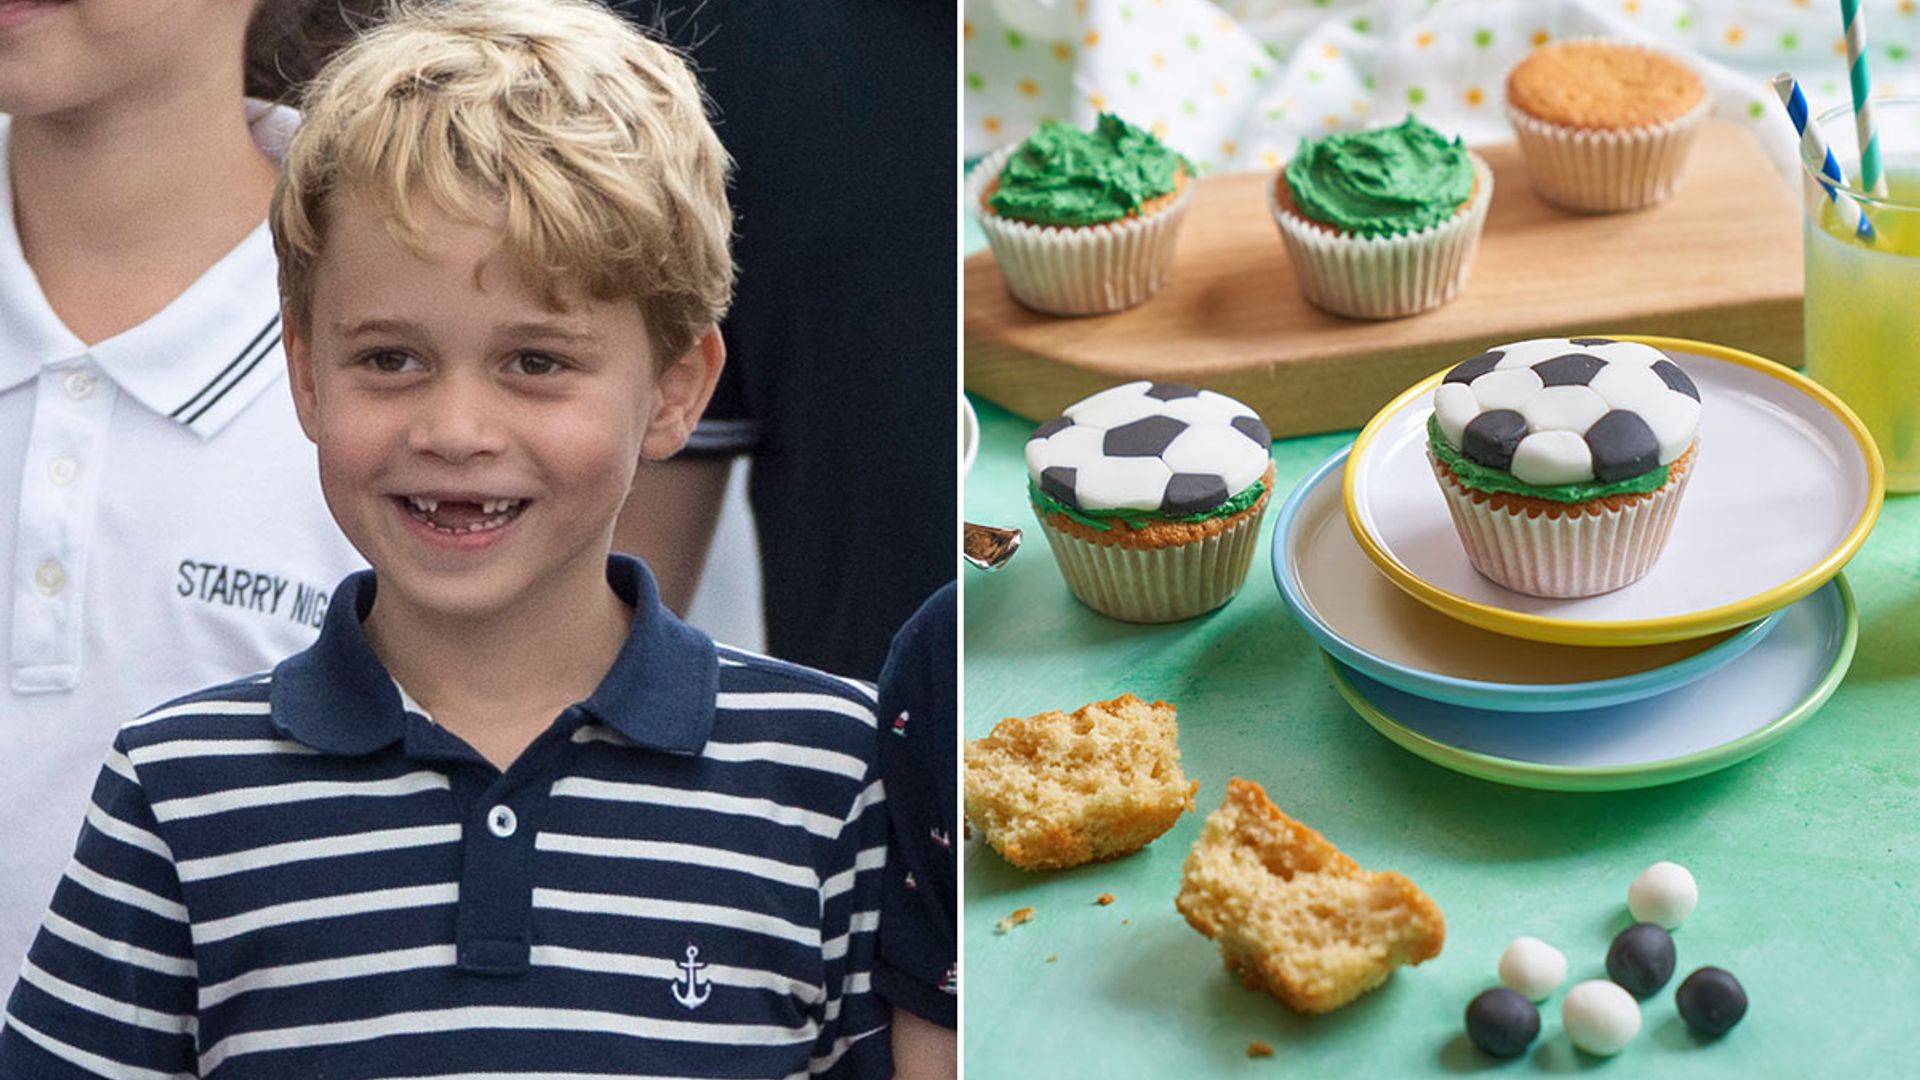 Party like a Prince! Annabel Karmel's football cupcake recipe in honour of royal birthday boy George